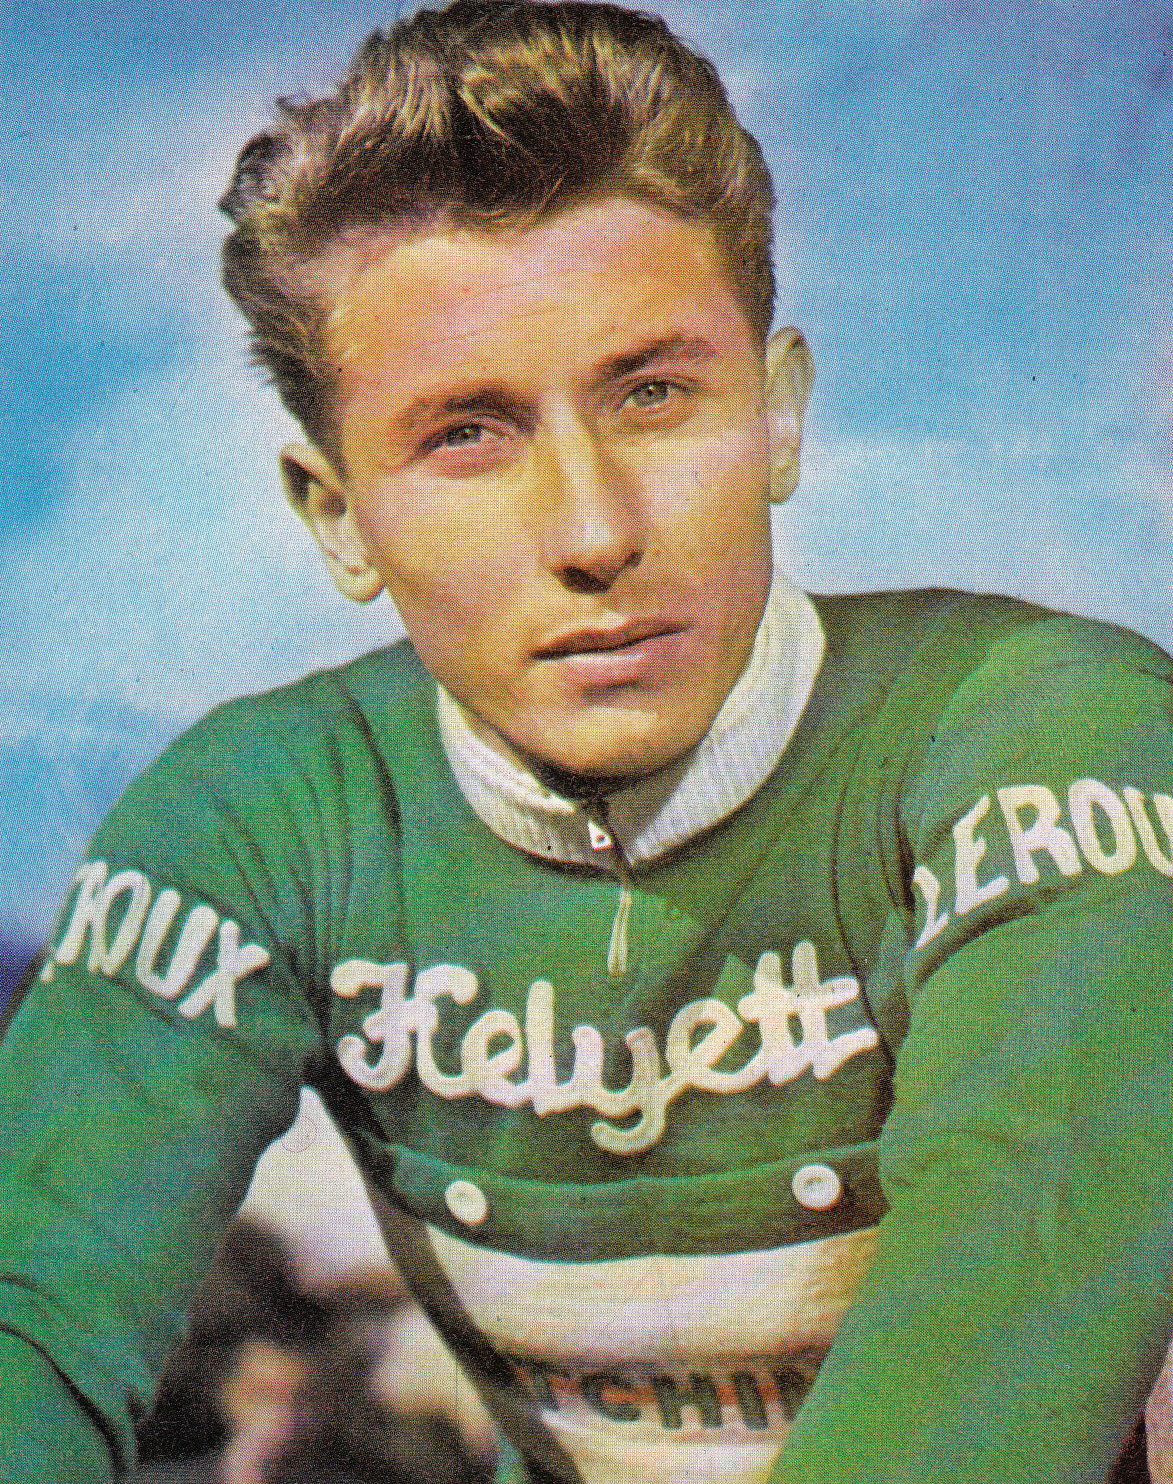 Bicihome Anquetil